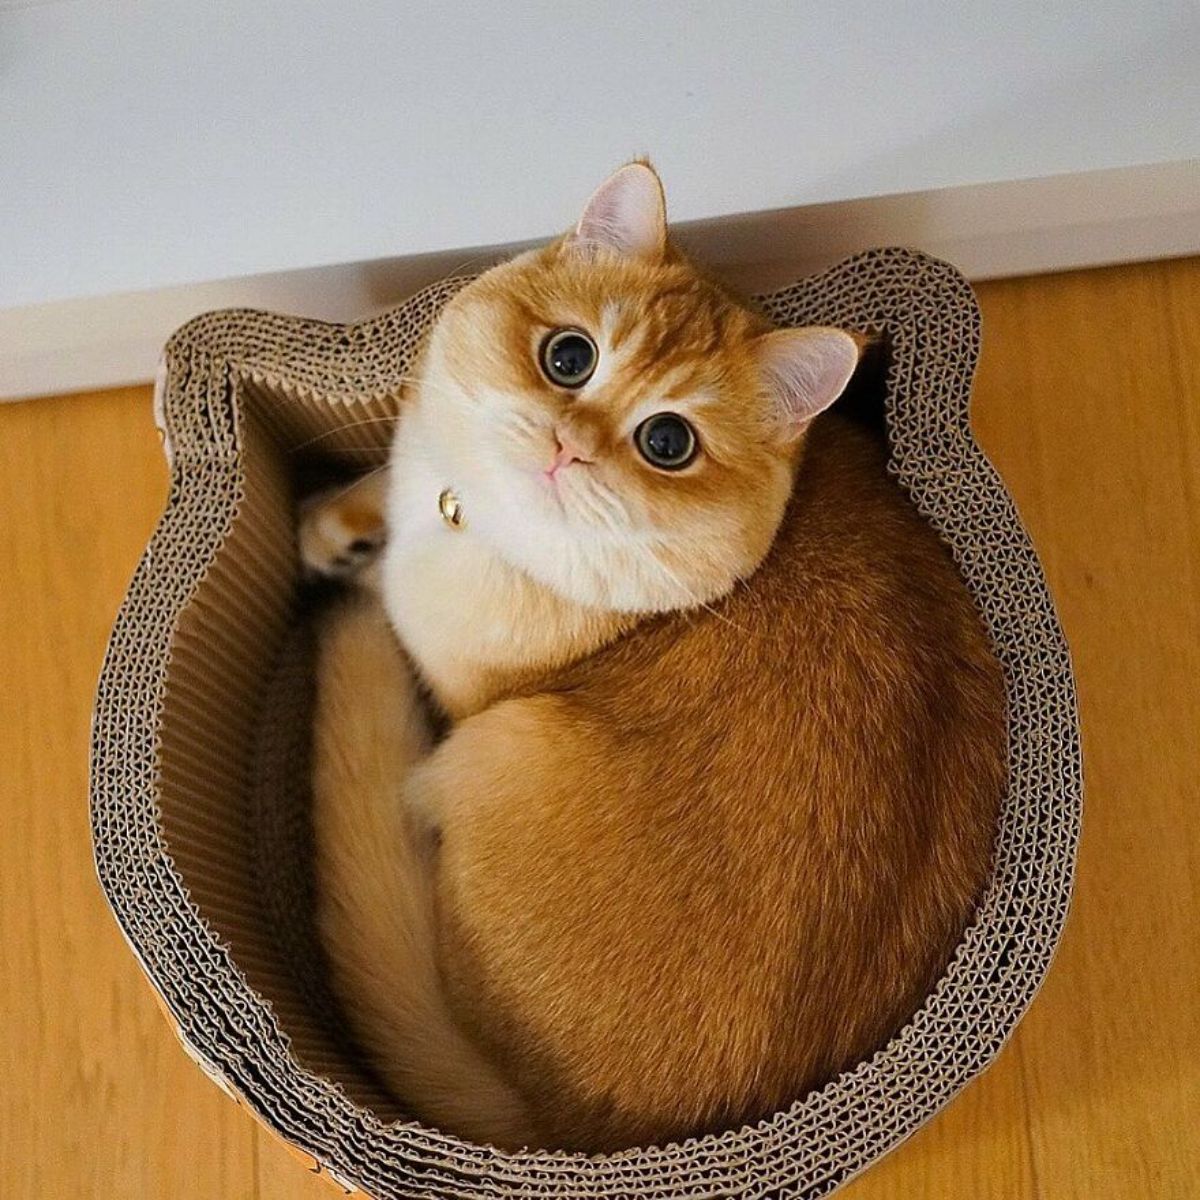 orange cat with large black eyes sitting in a cat shaped cardboard cat scratcher